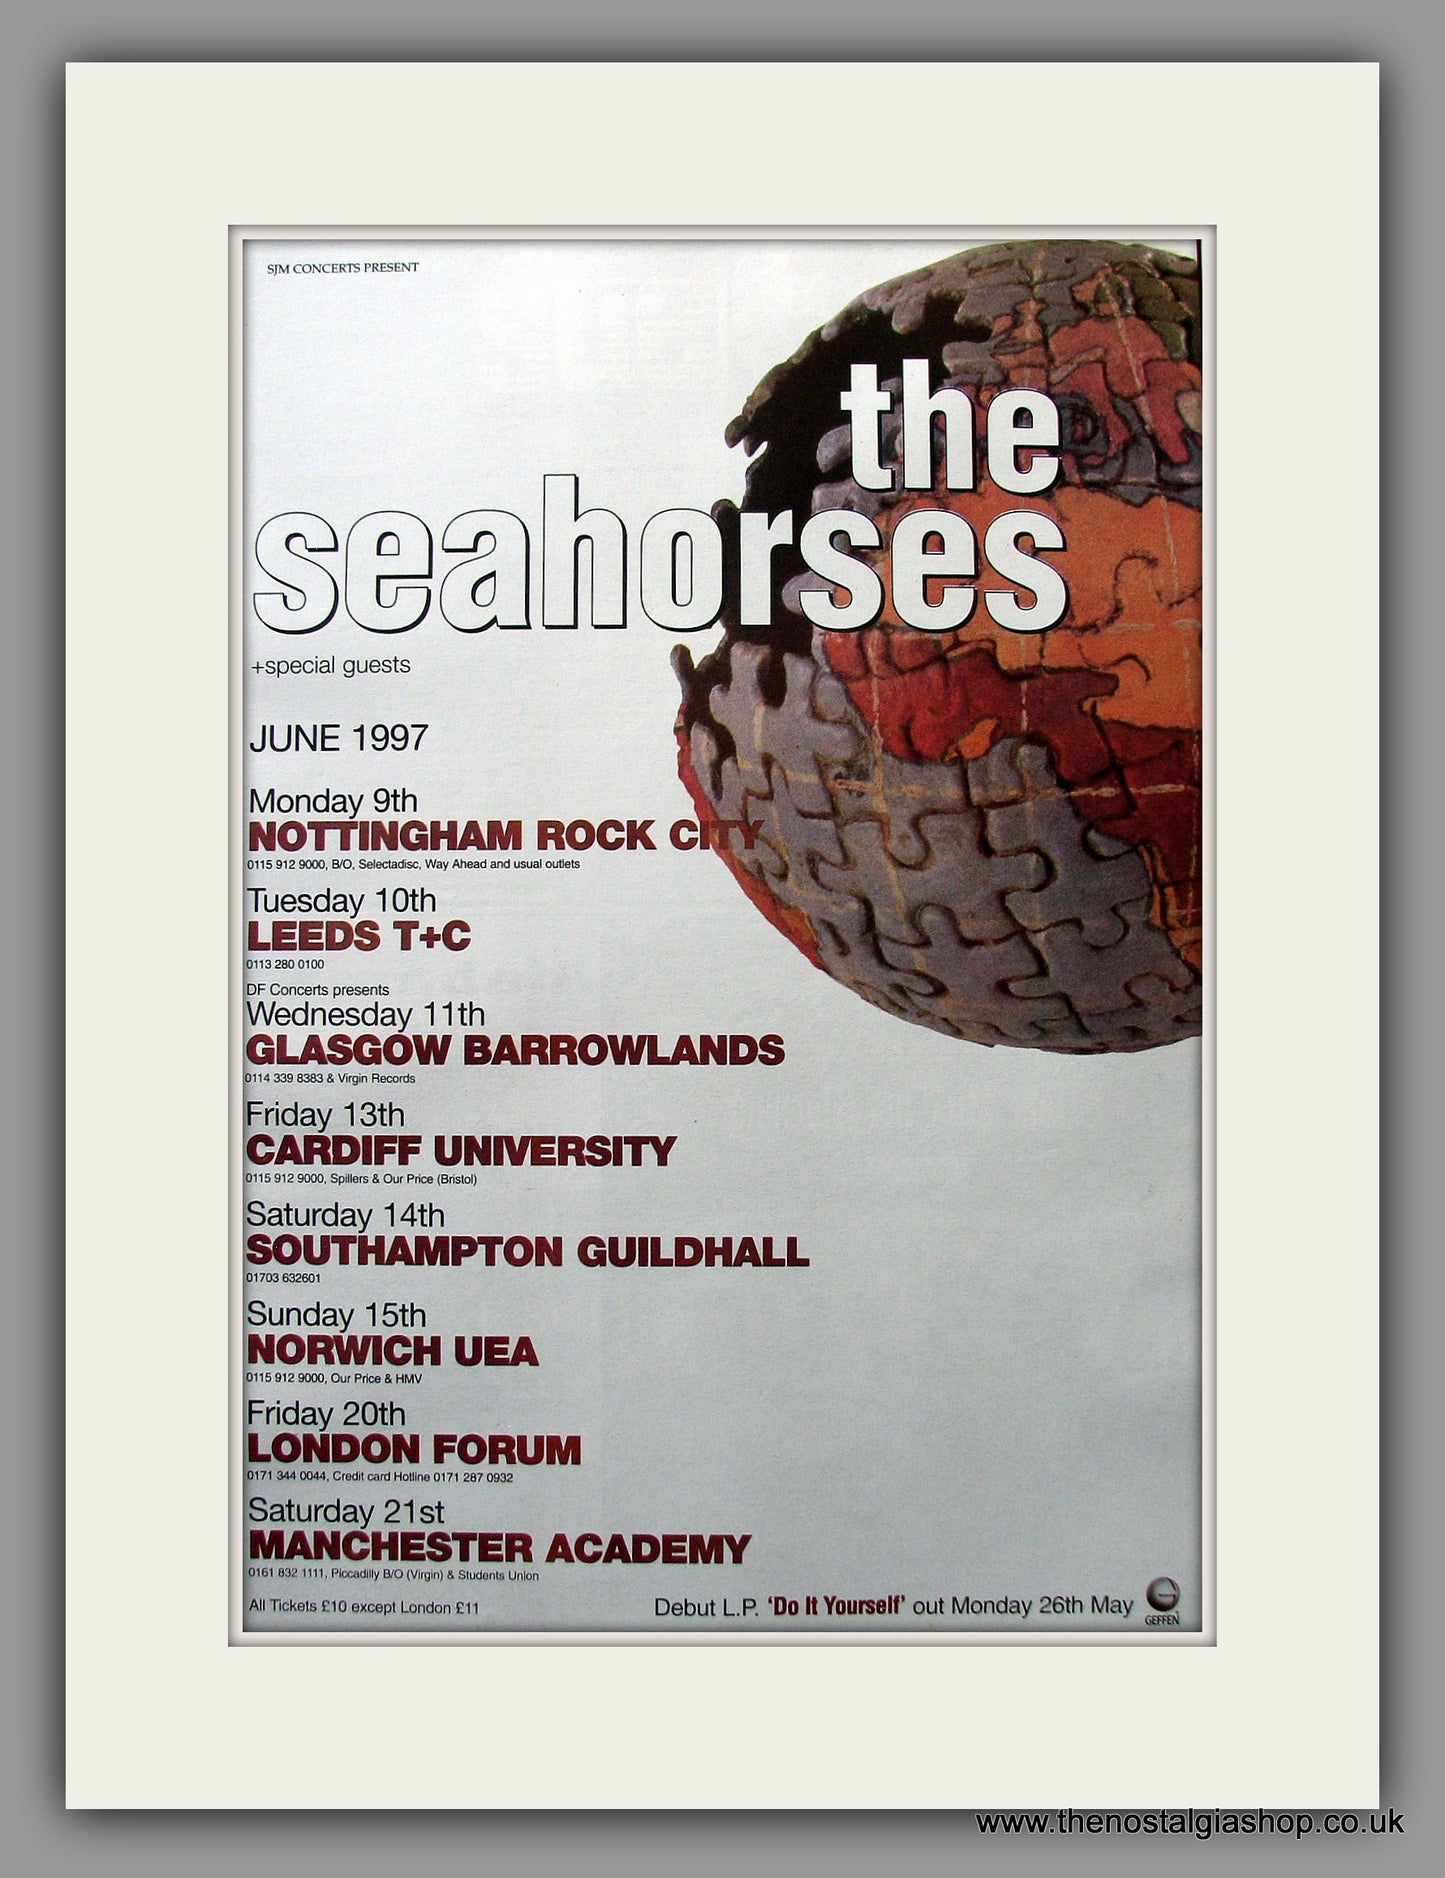 Seahorses (The) - Tour Dates June. Original Vintage Advert 1997 (ref AD11059)